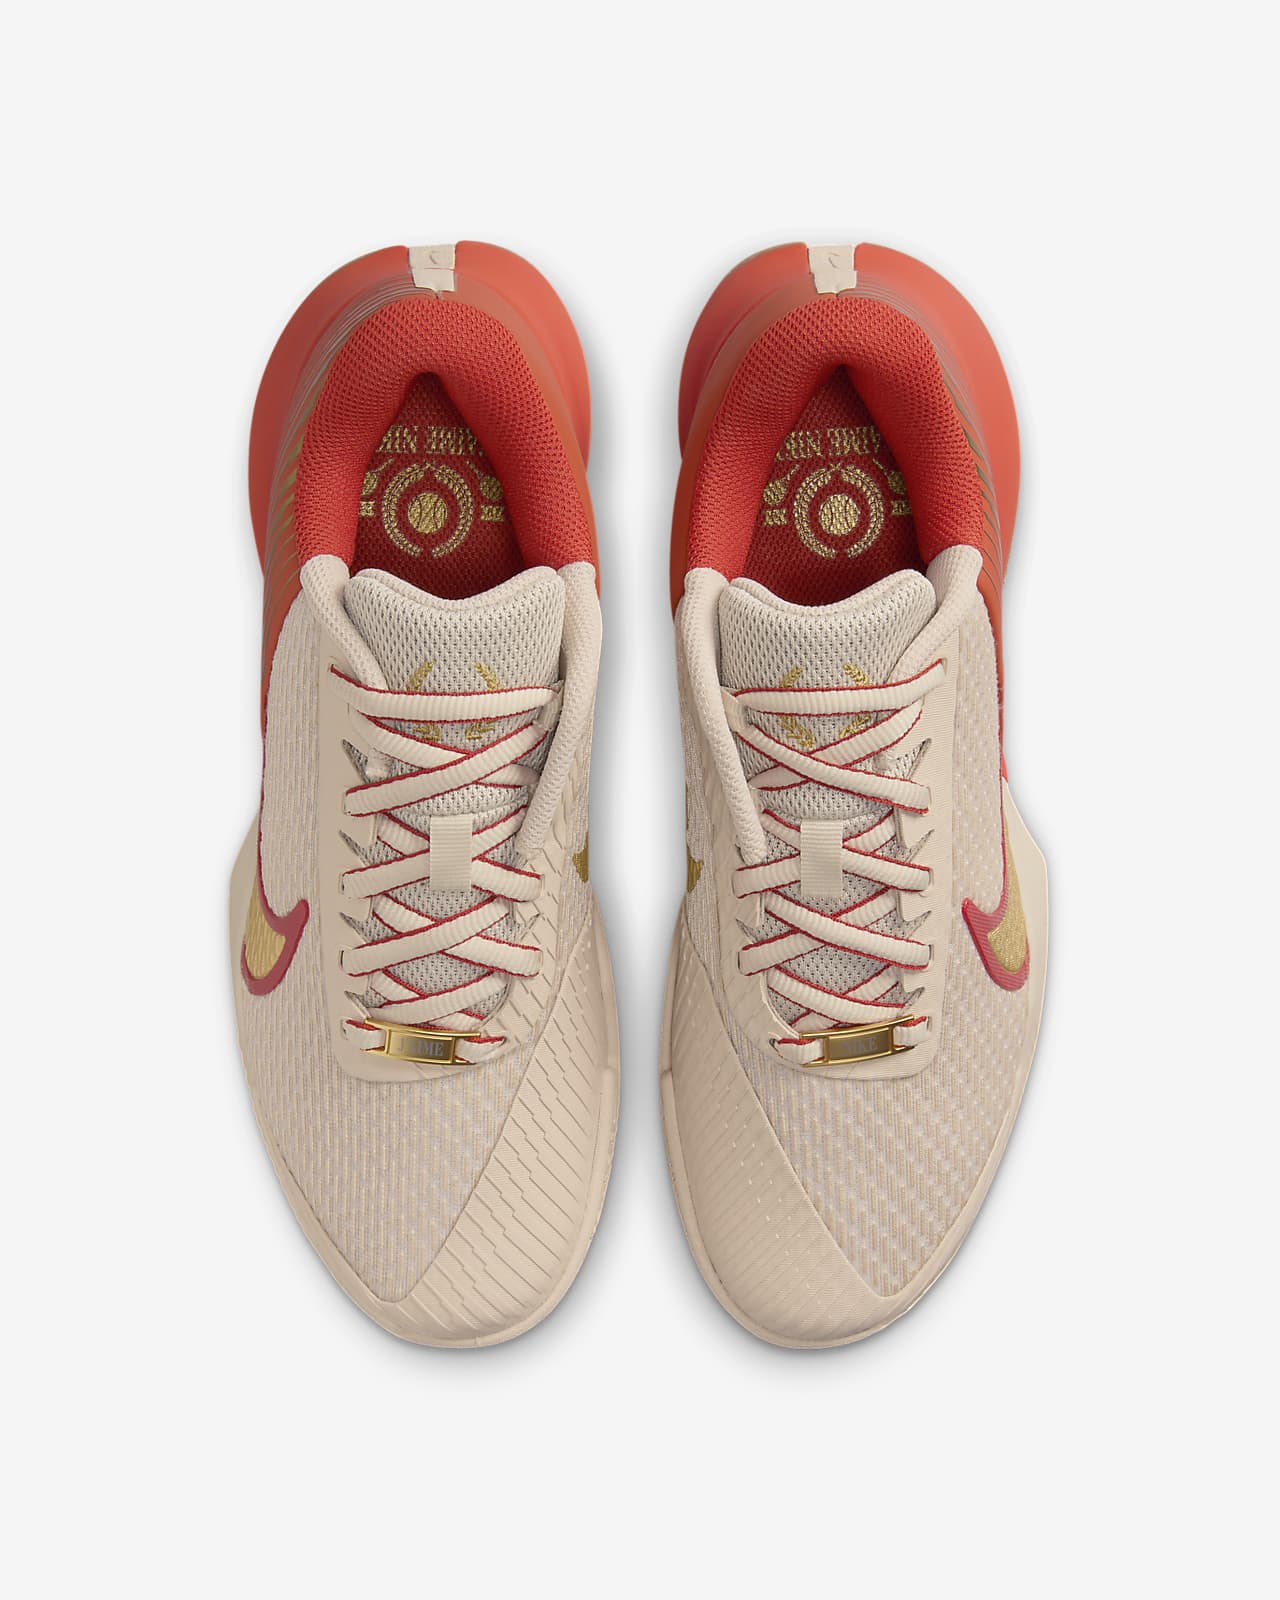 Nike Air Zoom Vapor Pro 2 Premium Women's Clay Court Tennis Shoes